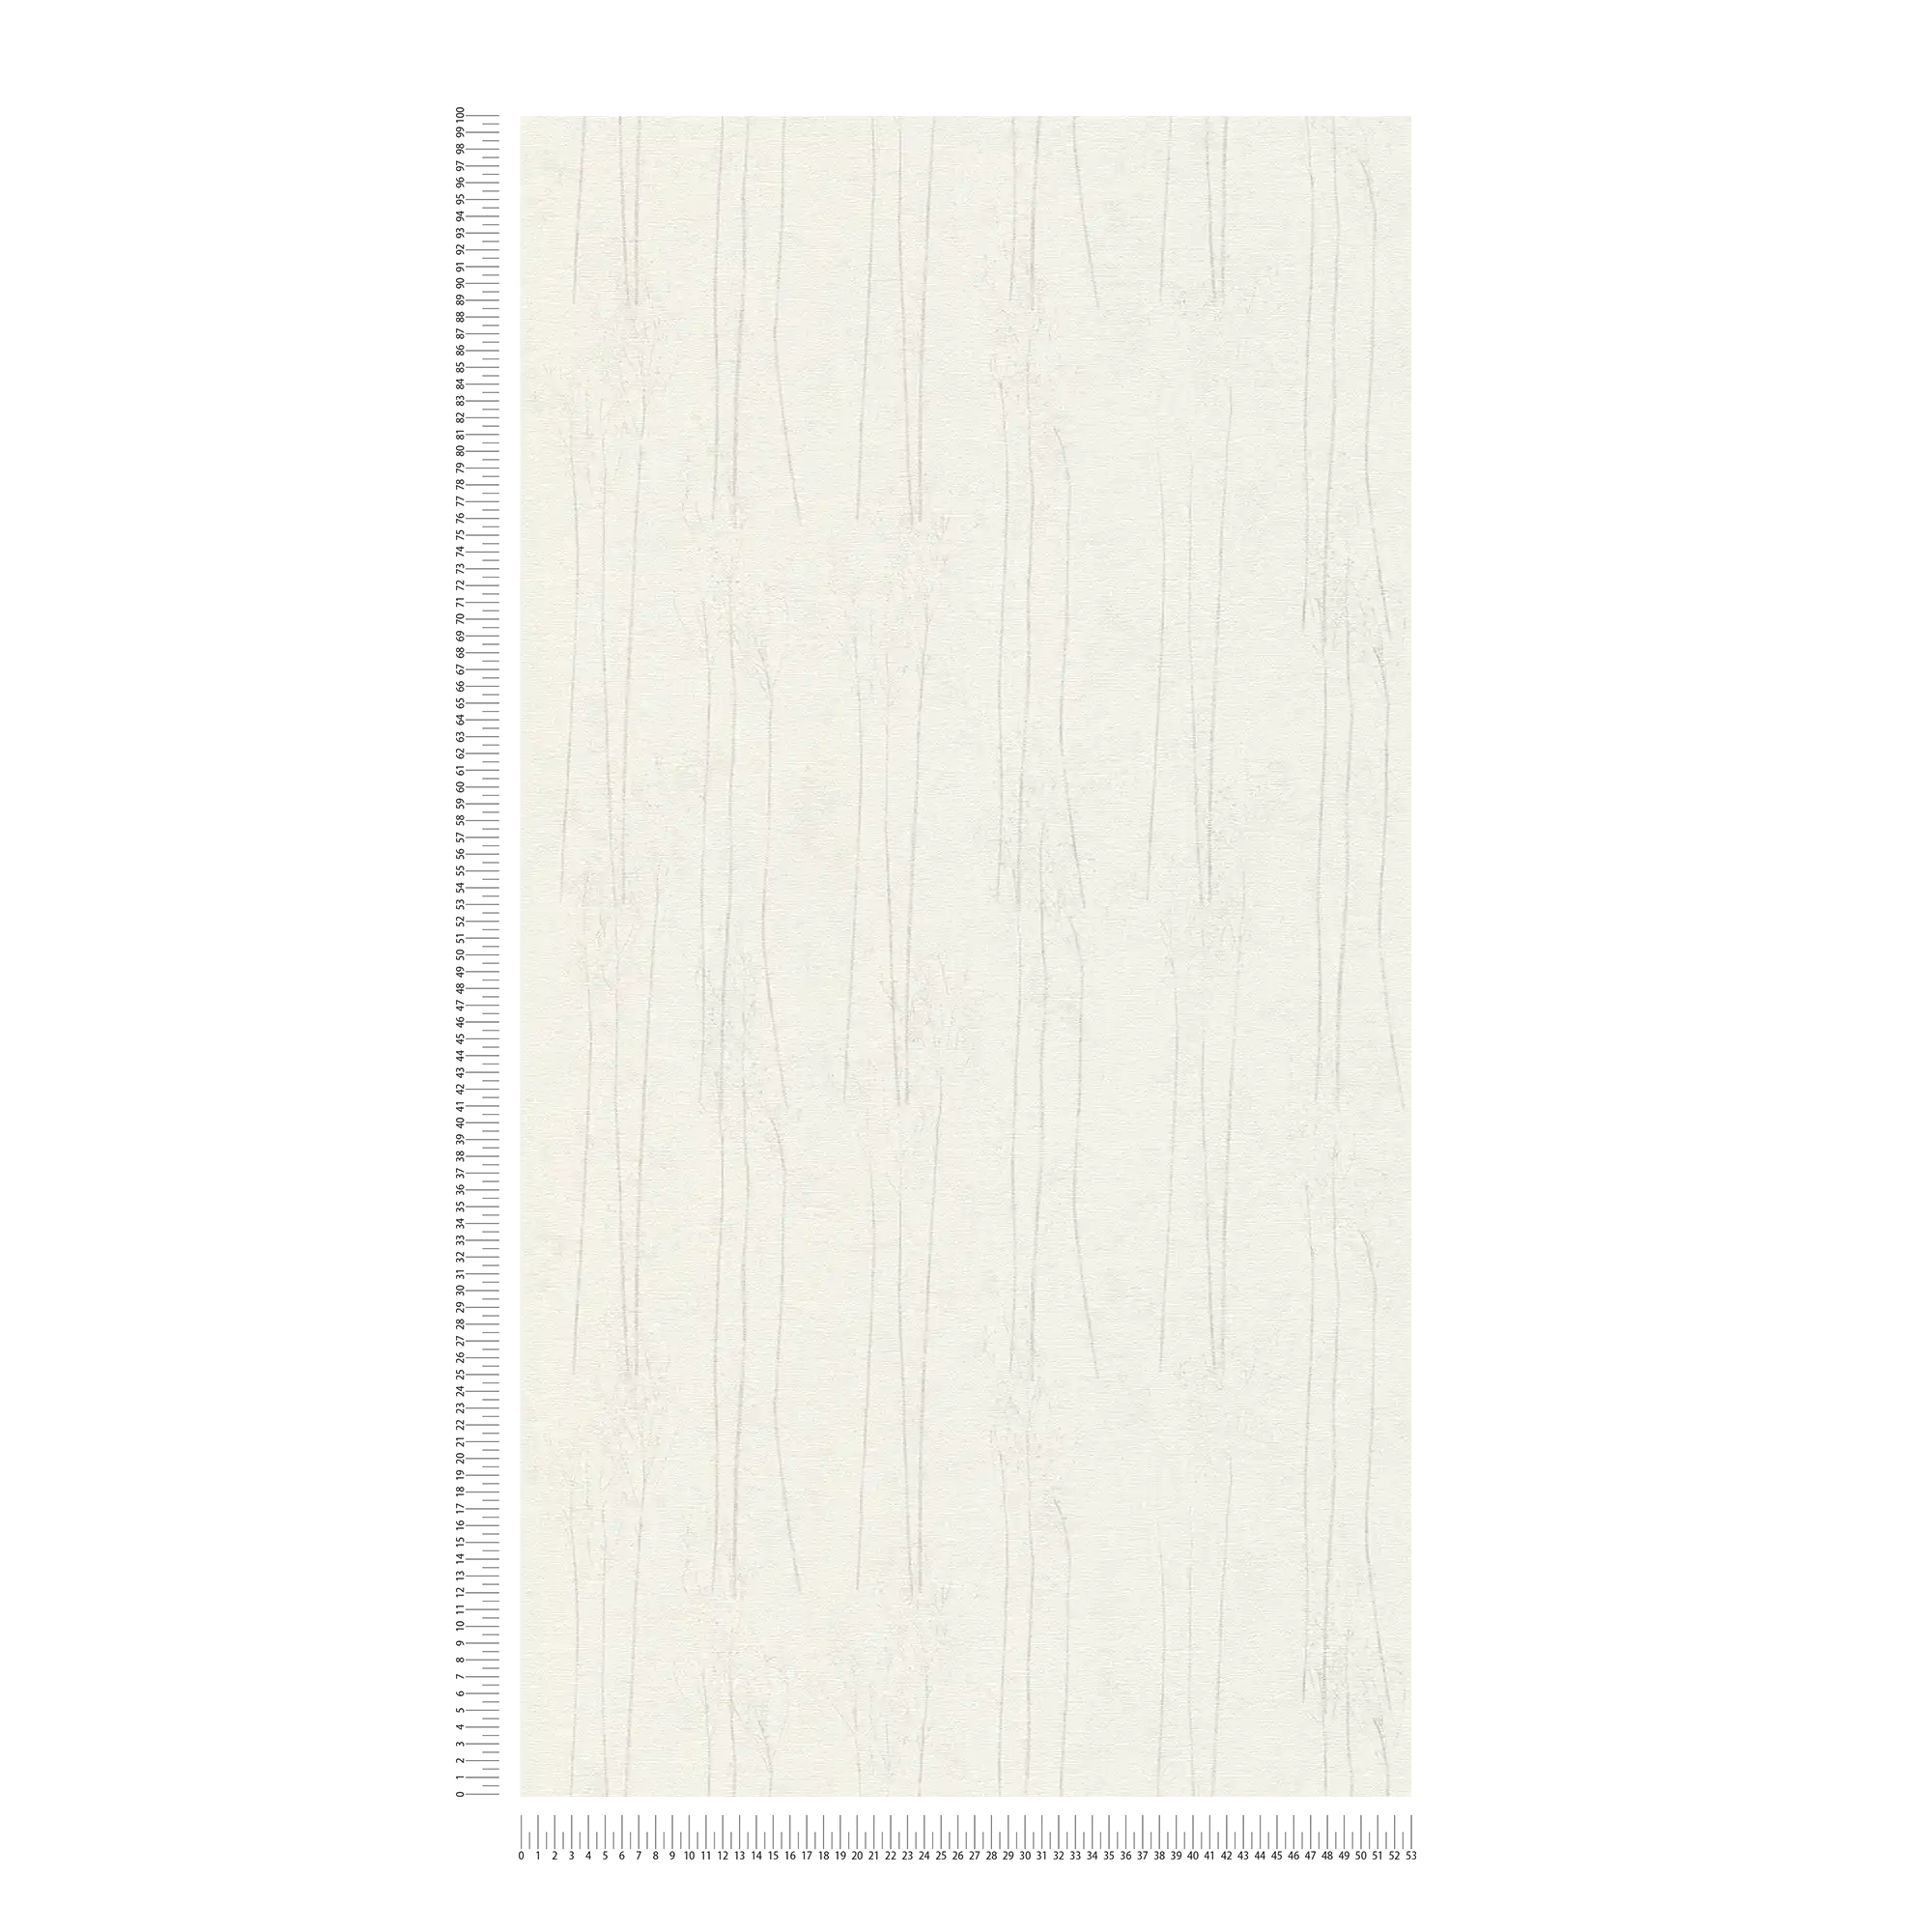             White wallpaper Scandi style with natural pattern - grey, white
        